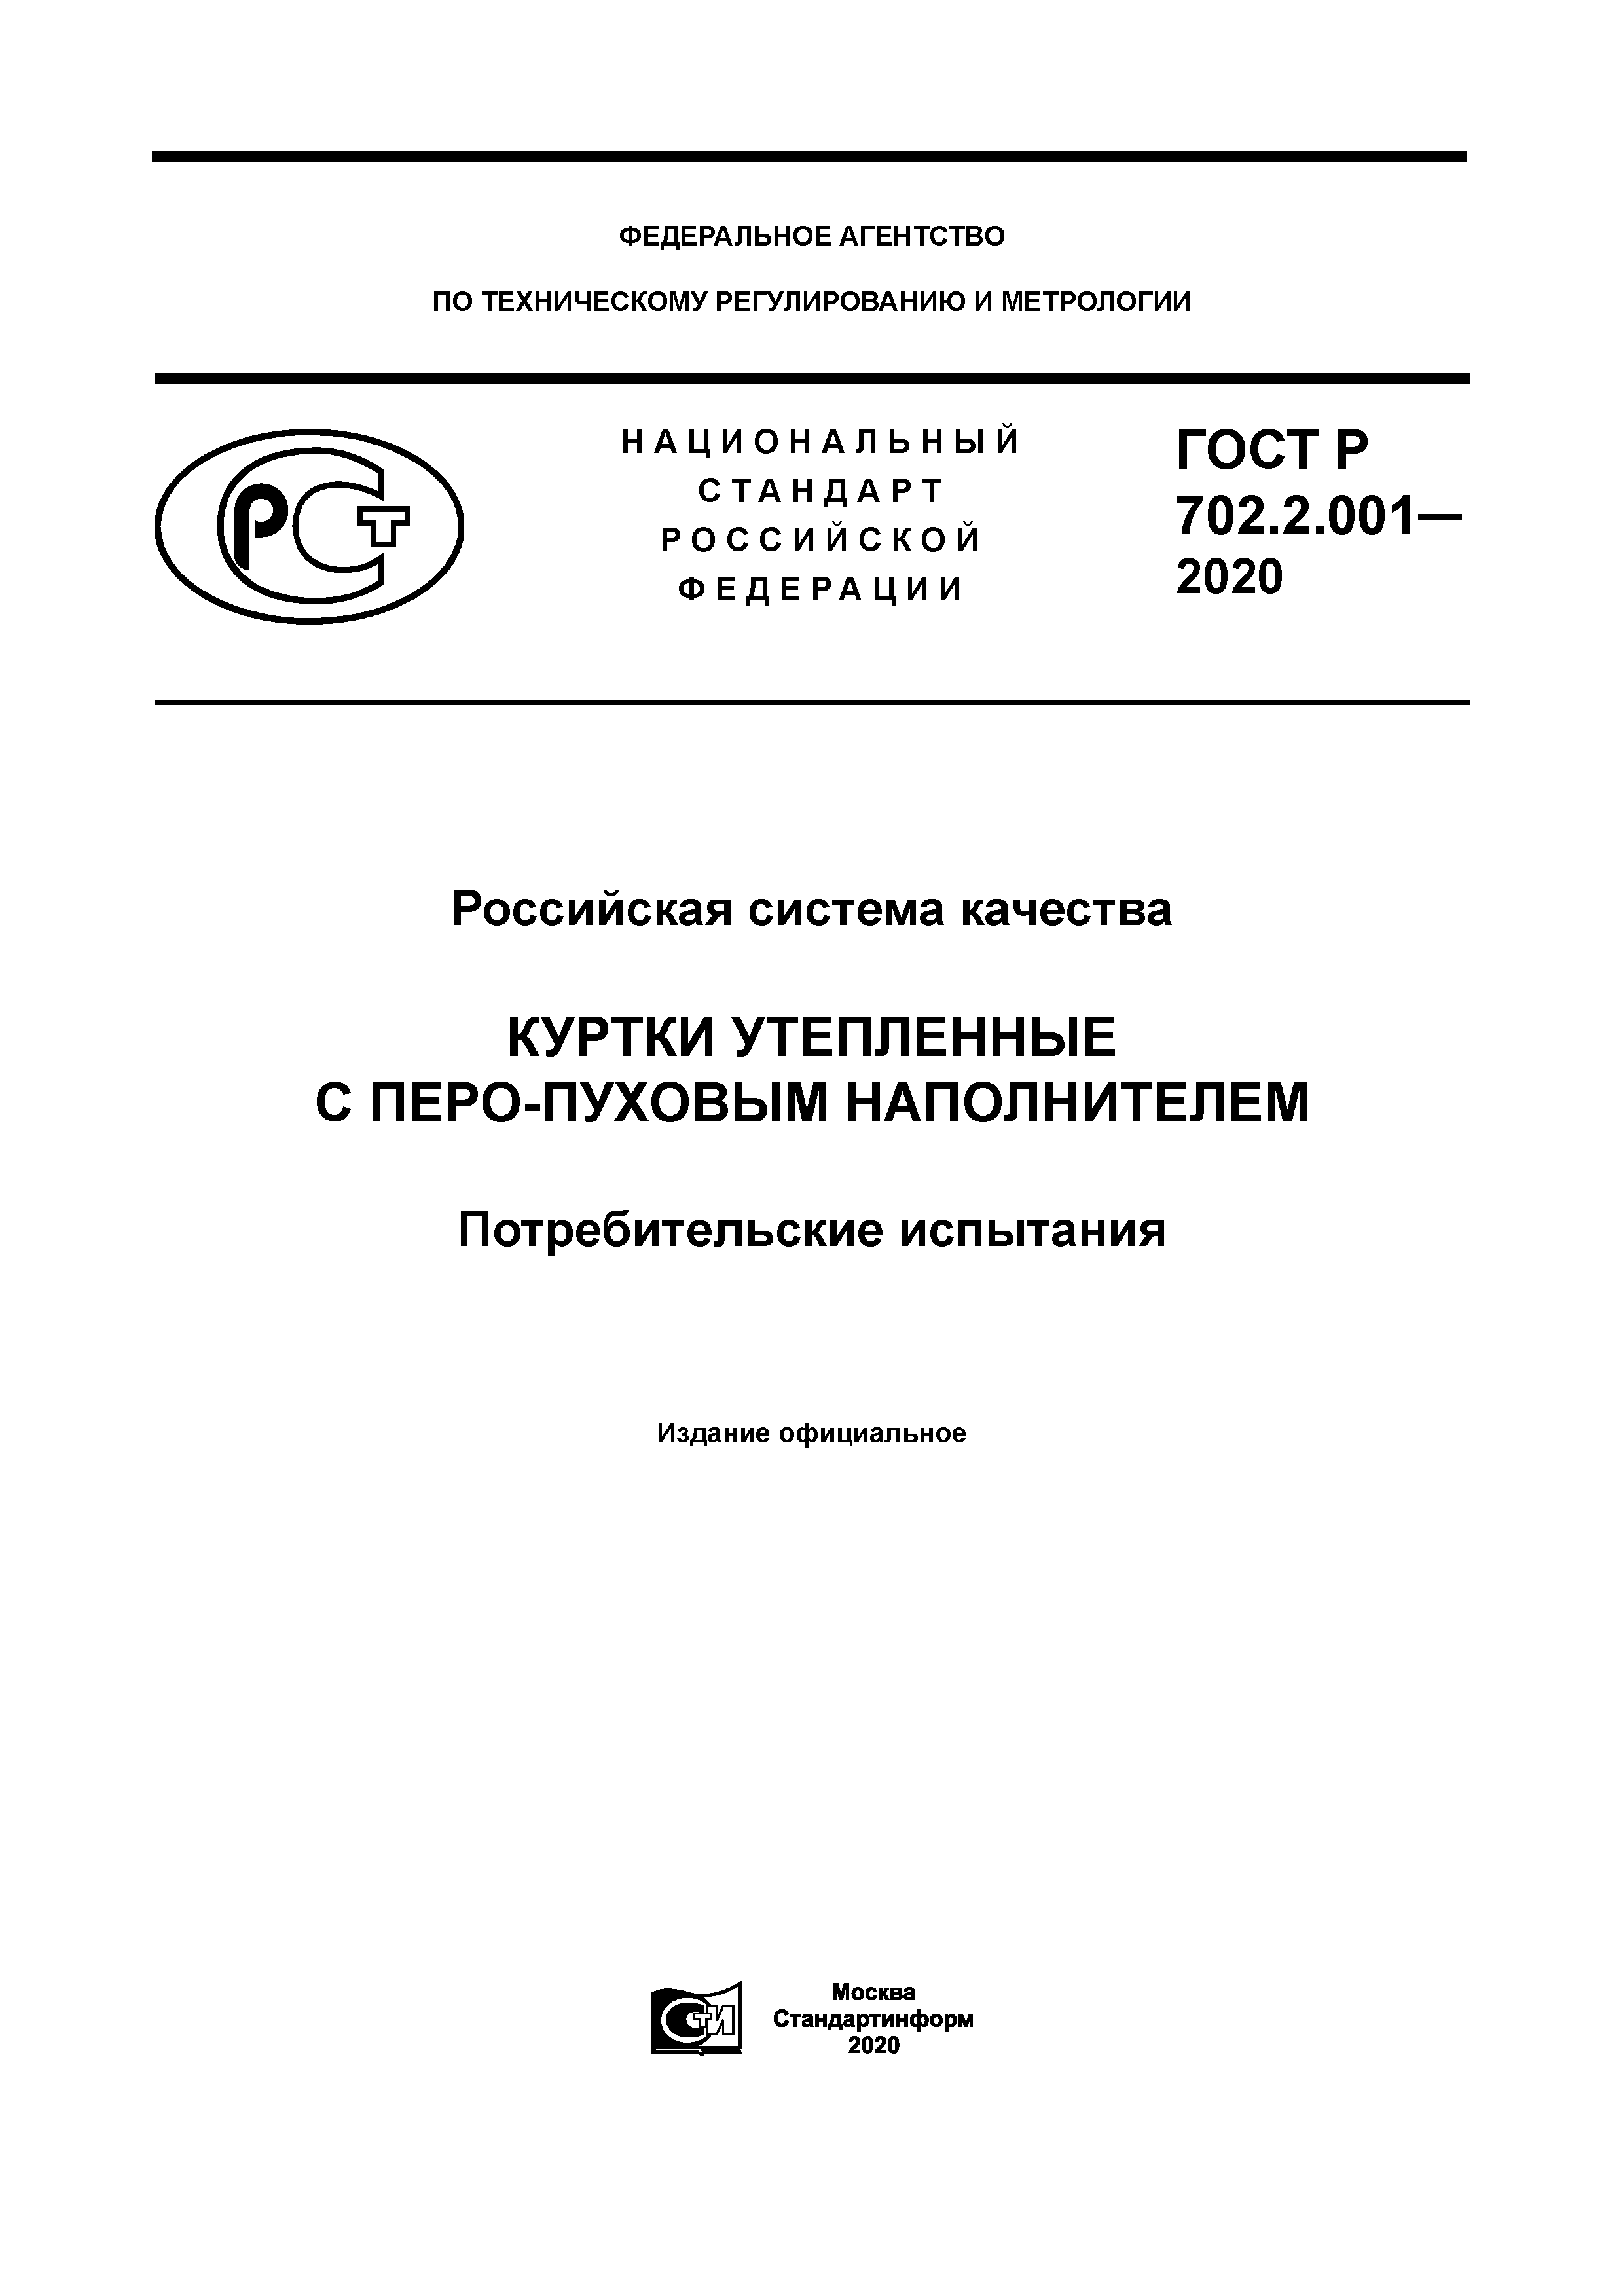 ГОСТ Р 702.2.001-2020